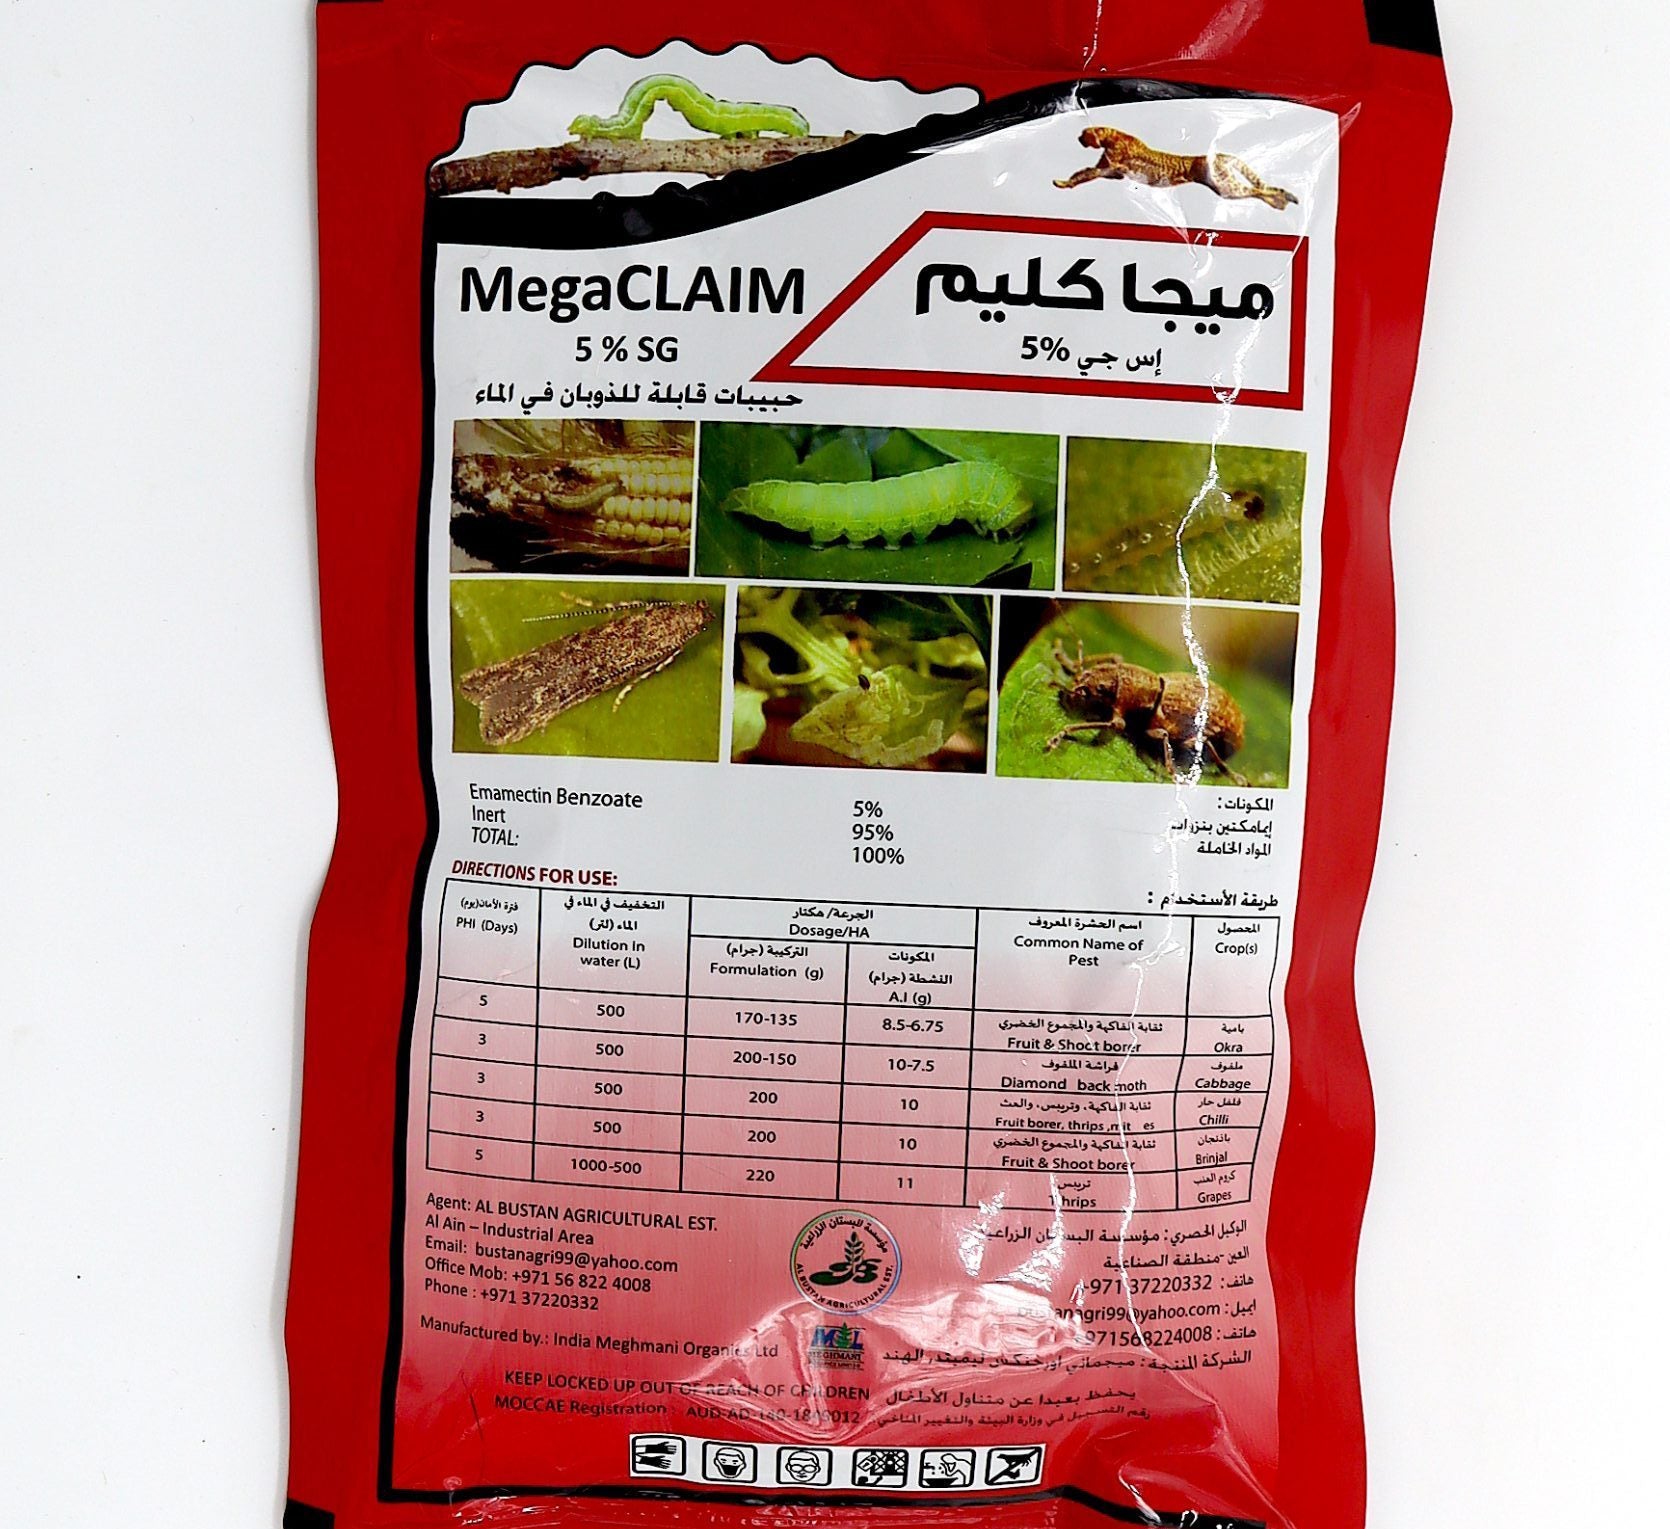 Mega CLAIM 5% SG “Agri Insecticide for Moths, Borer & Thrips”